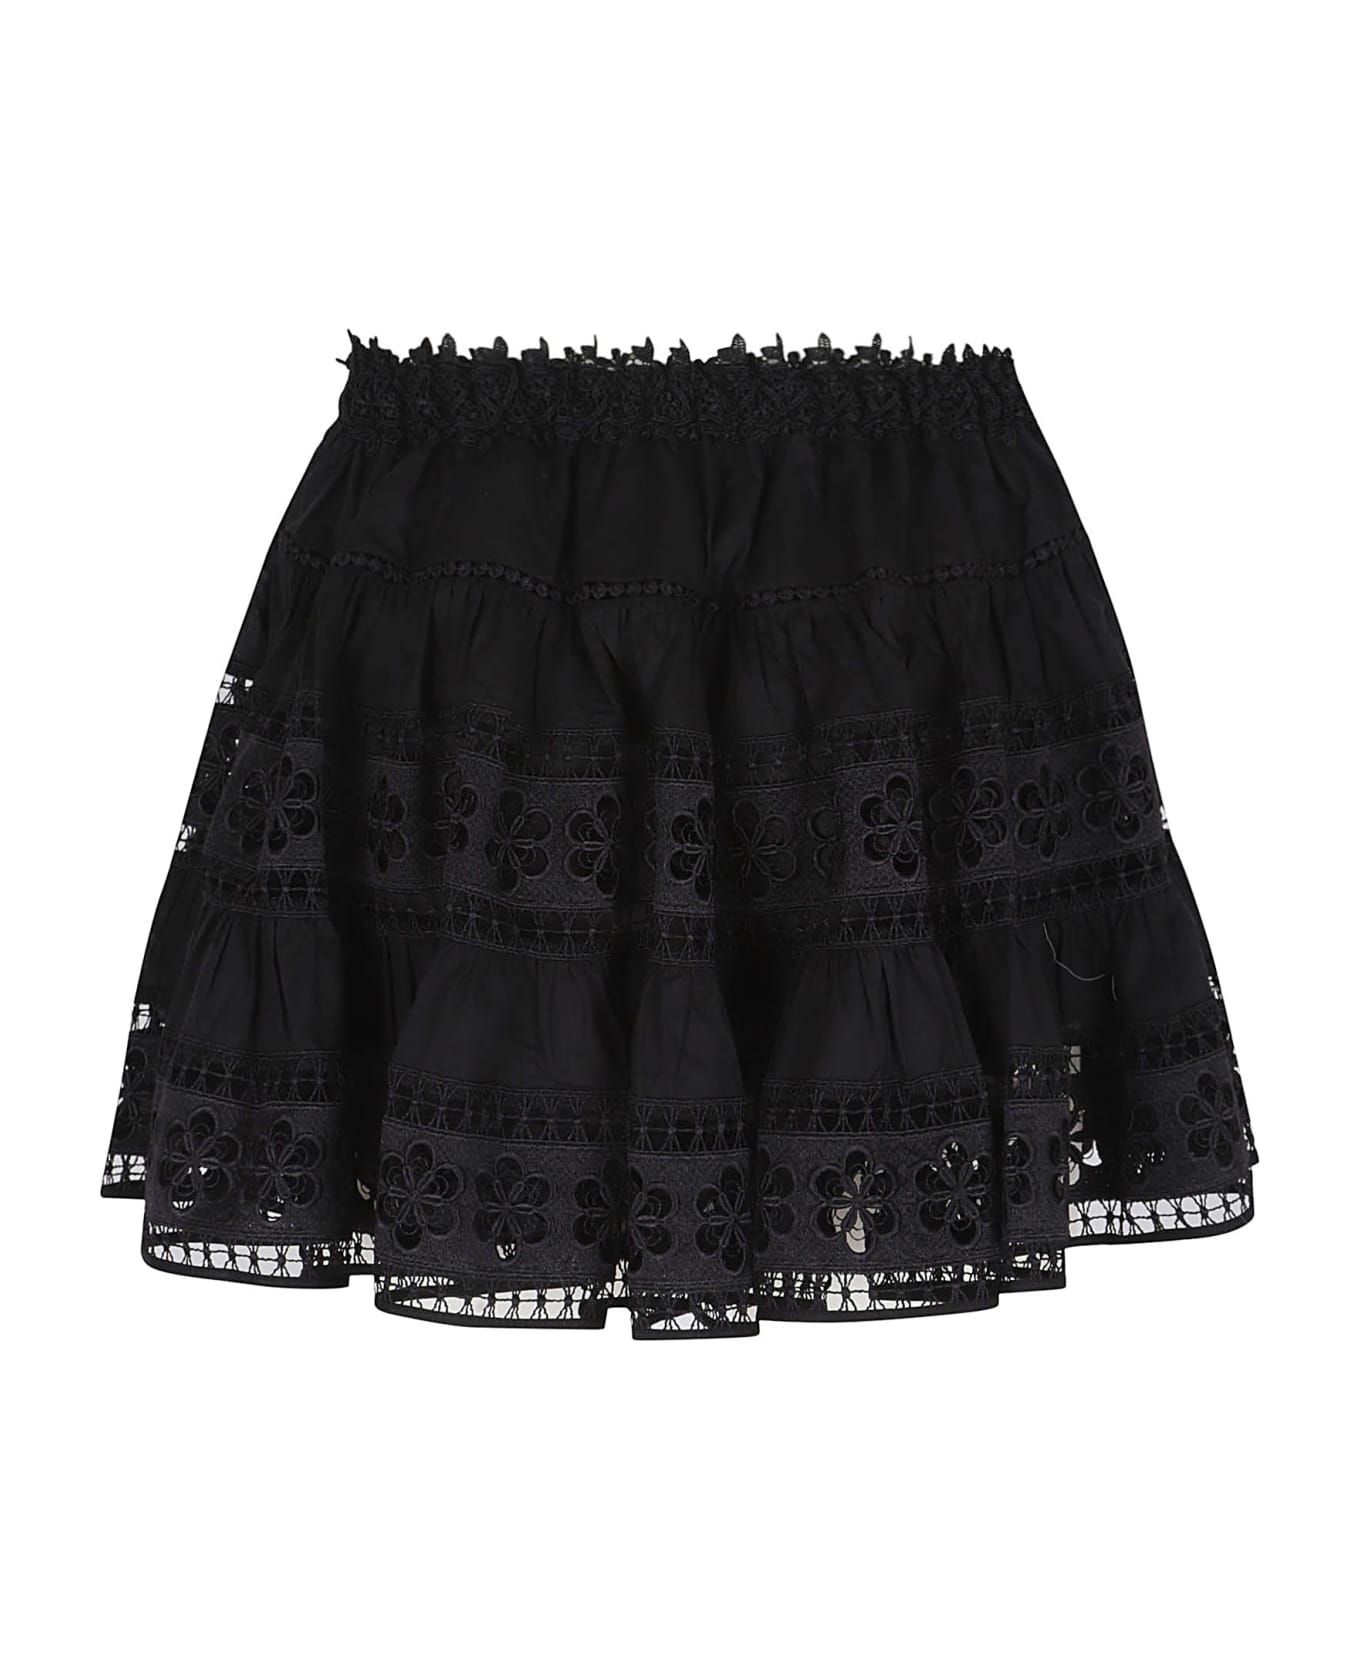 Charo Ruiz Short Skirt Lea - Black スカート